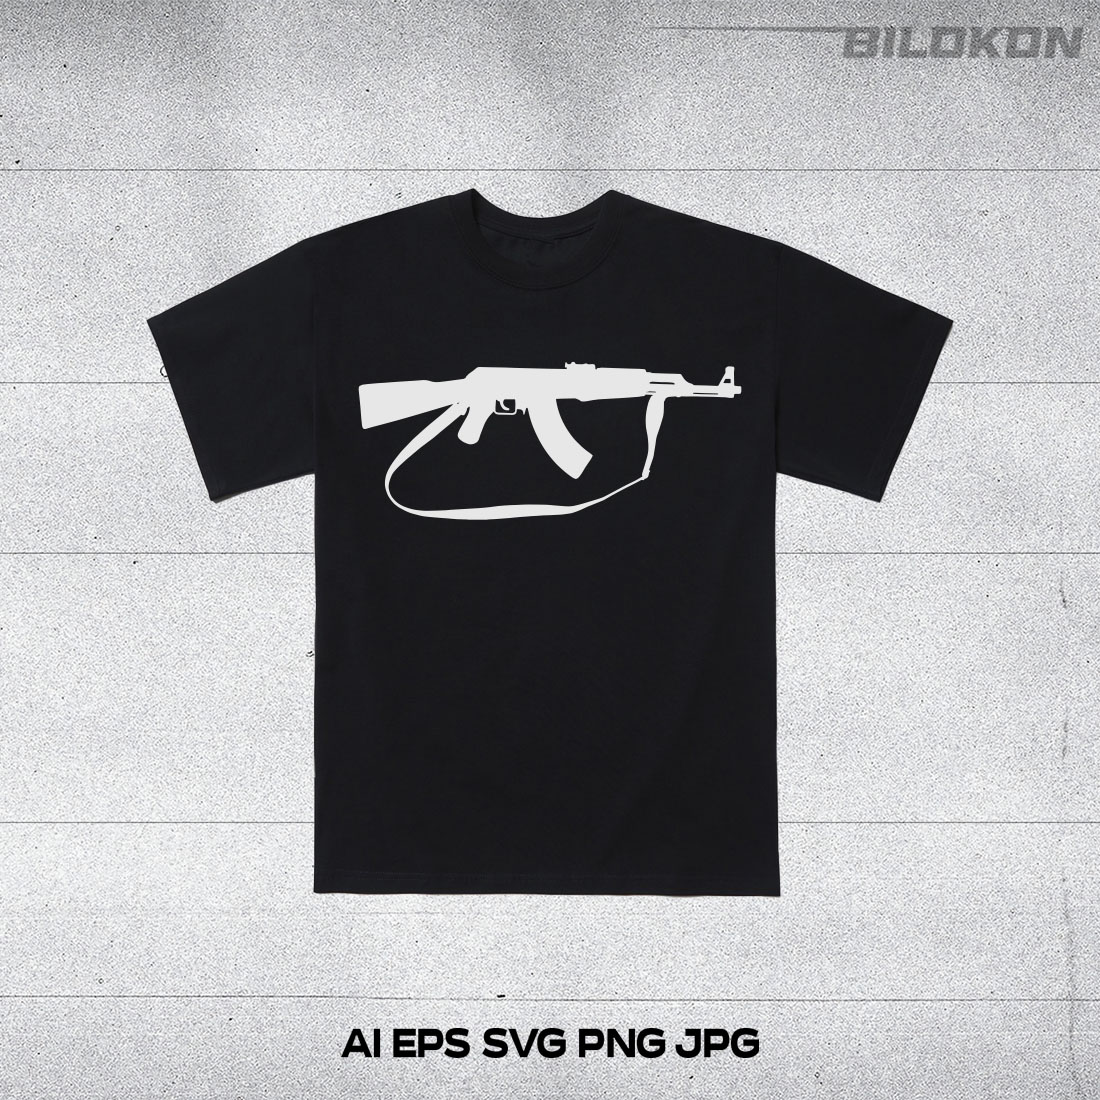 Kalachnikov, AK-47 Silhouette Set, Gun, SVG Vector cover image.